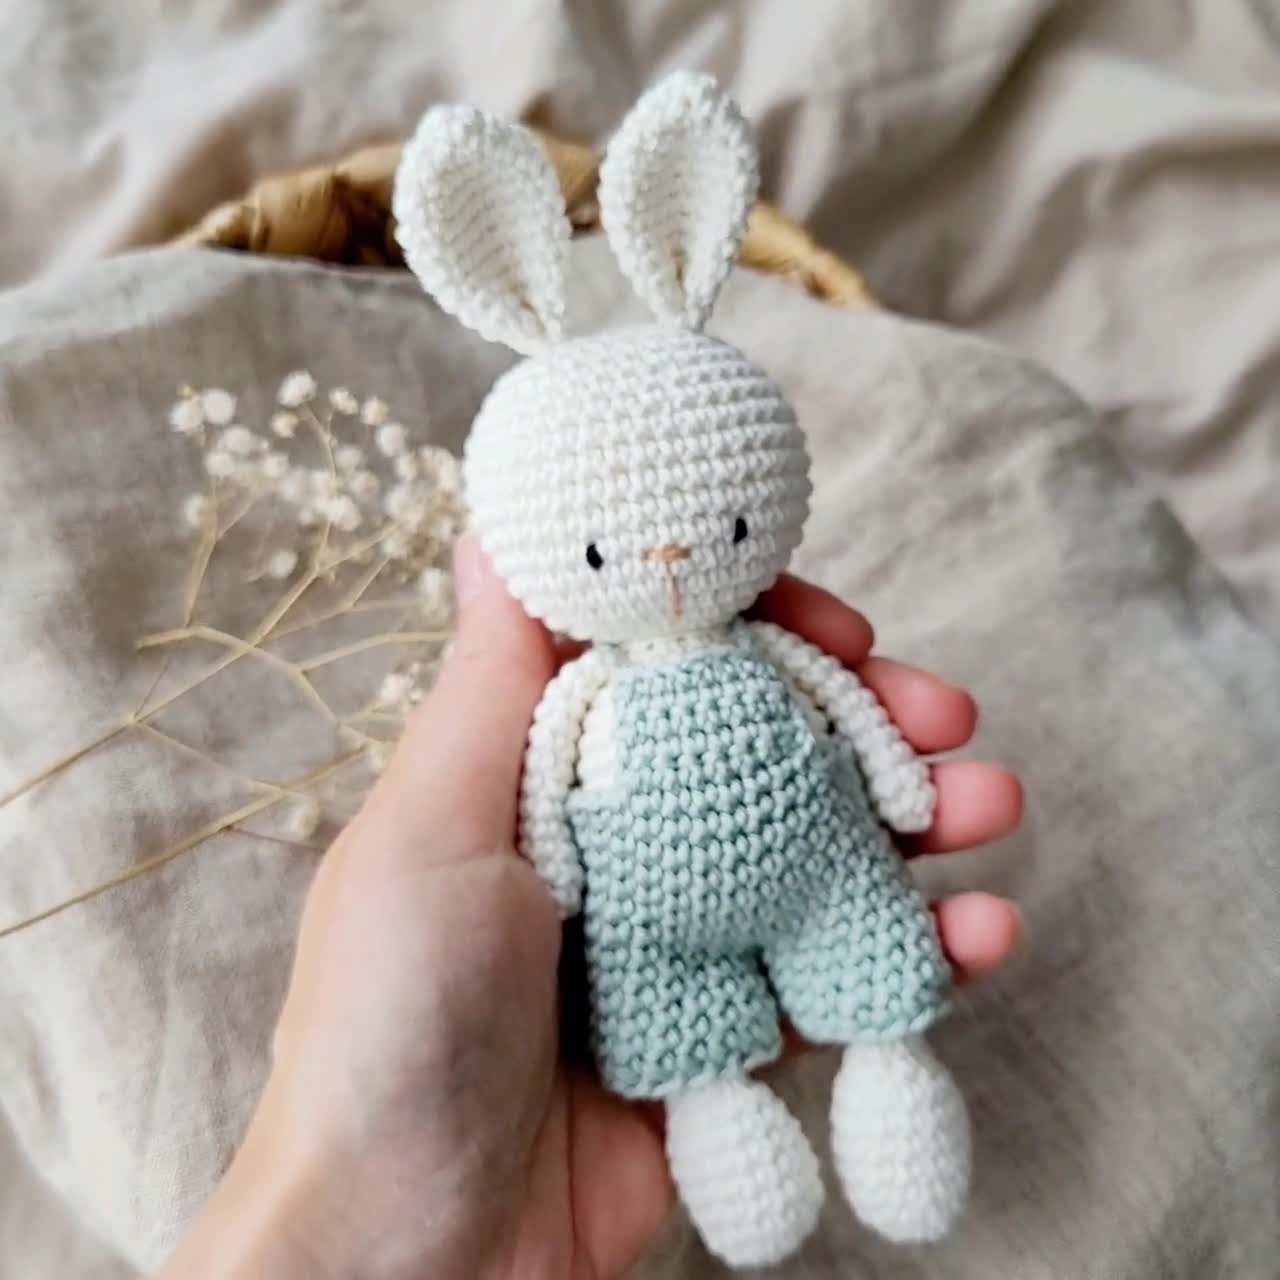 Adorable Amigurumi, lapin avec pantalon salopette au crochet, un